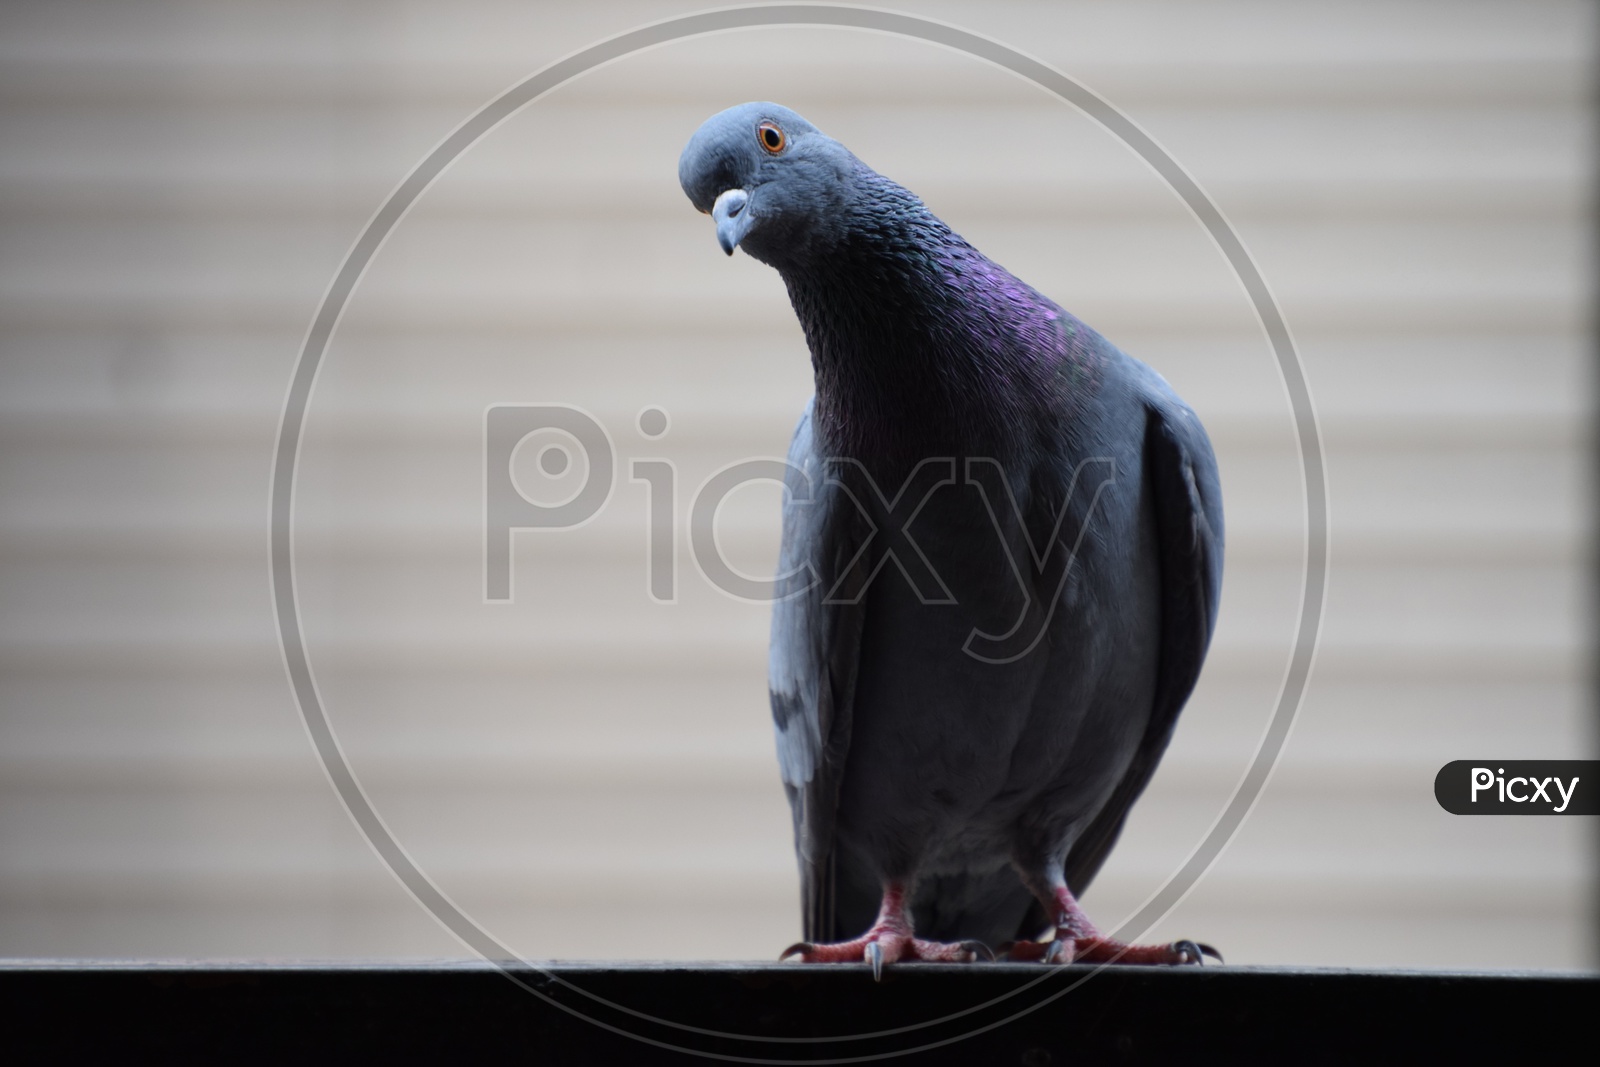 Close Up Portrait of Delhi Pigeon